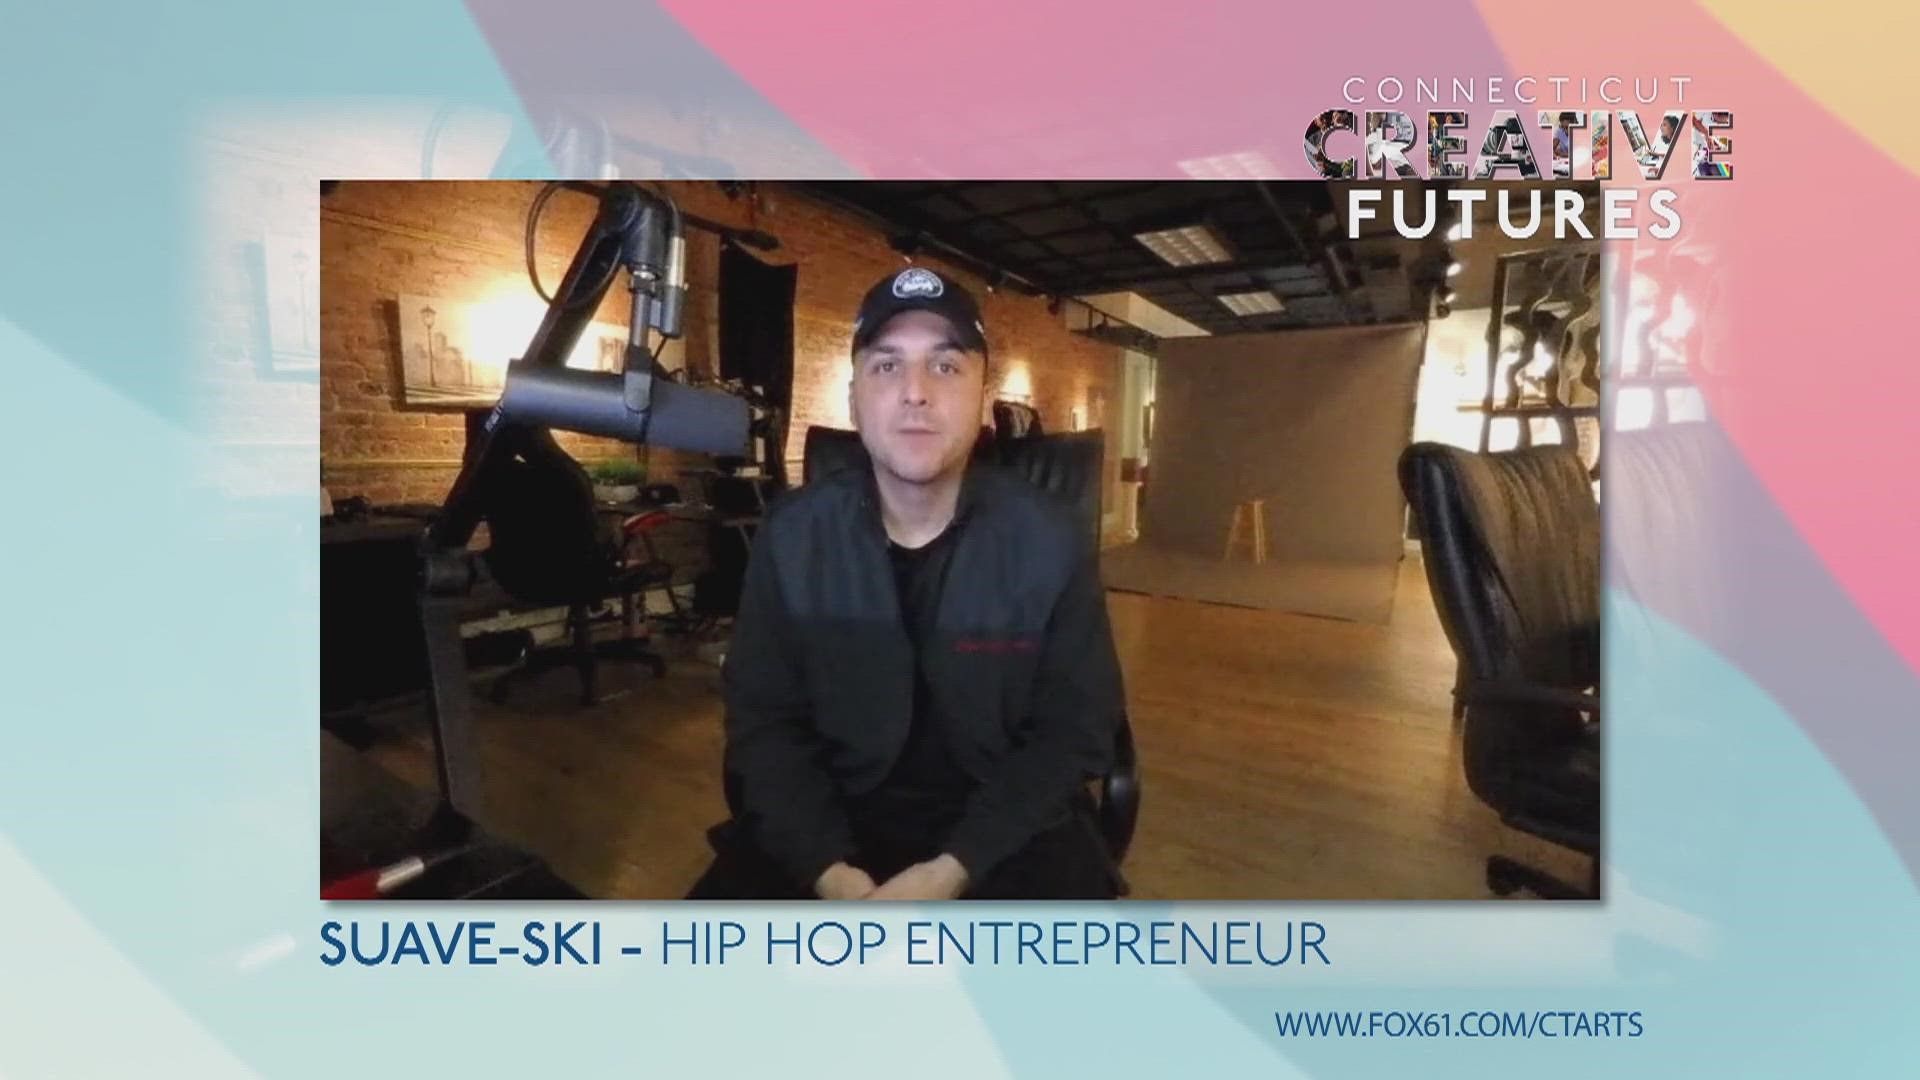 Suave Ski, a hip hop entrepreneur from New London